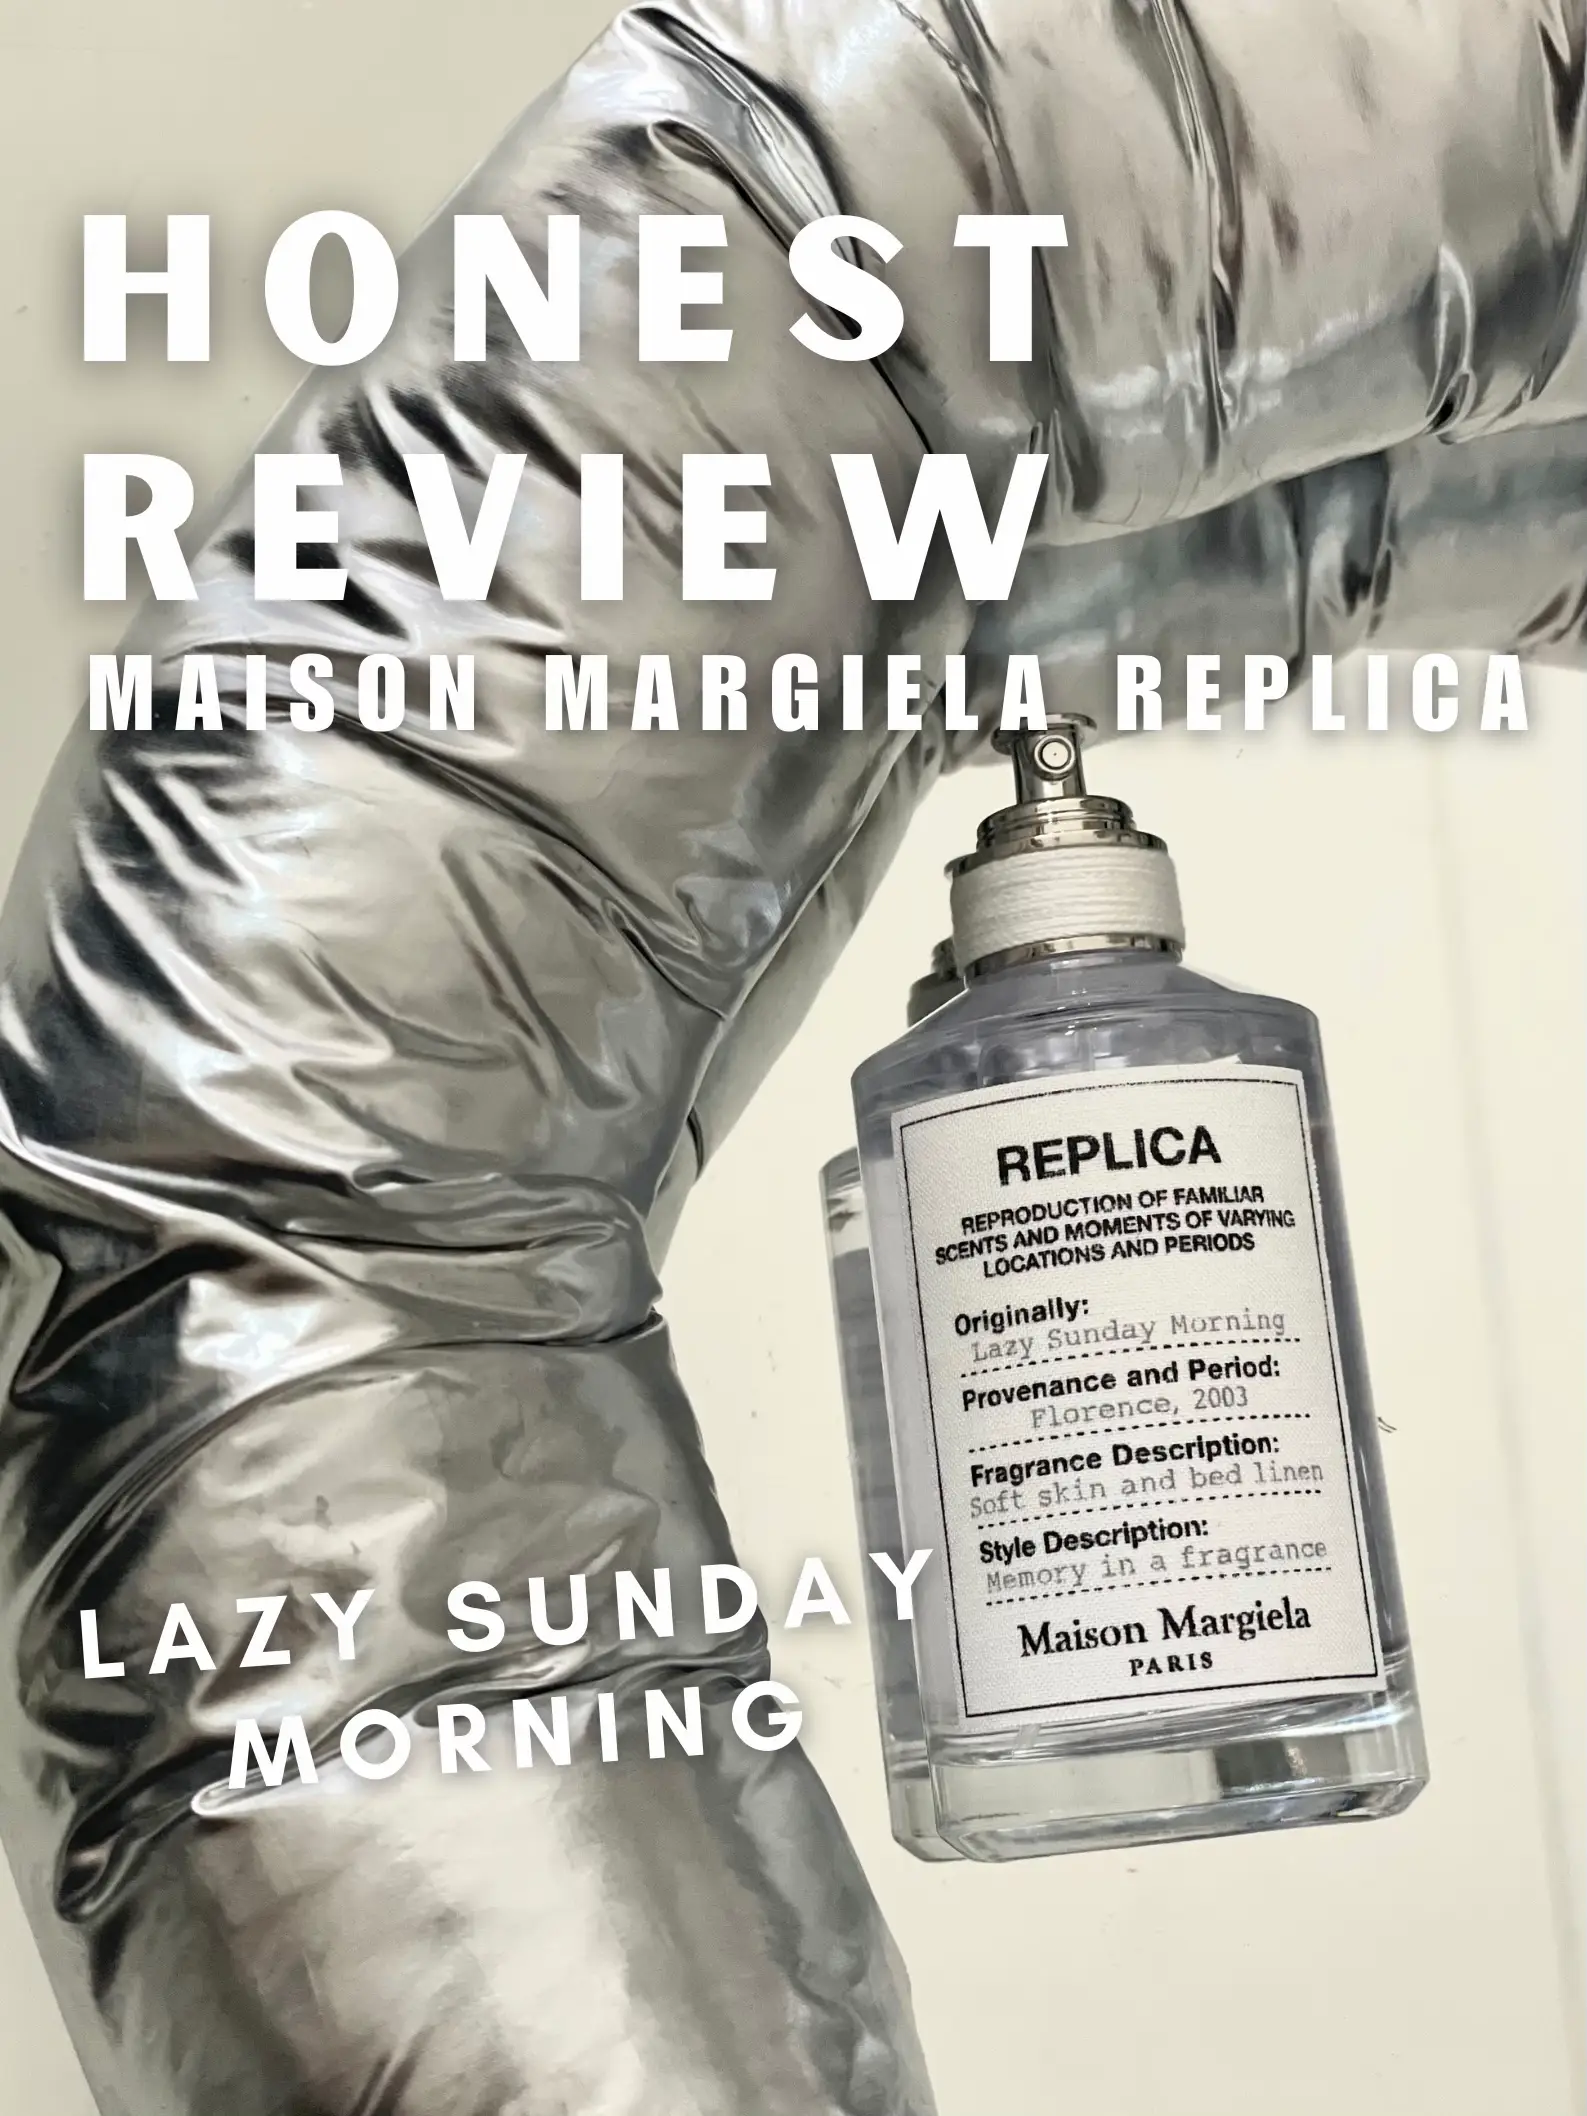 HONEST REVIEW MAISON MARGIELA-LAZY SUNDAY MORNING | Gallery posted